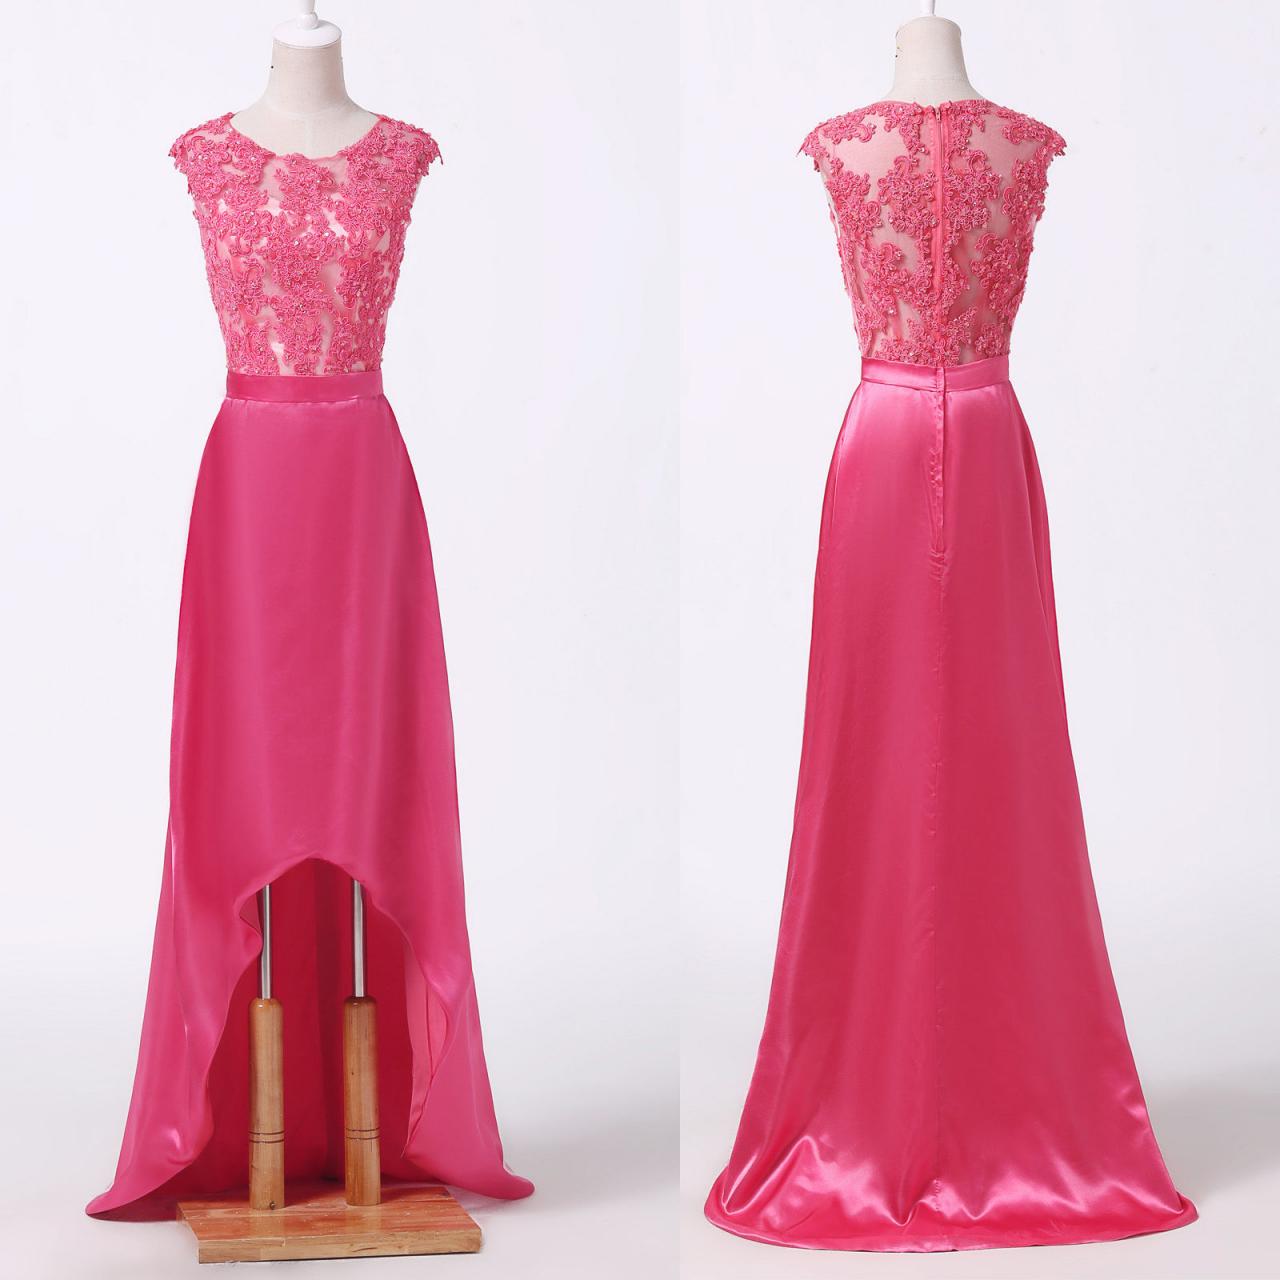 Fashion Full Length Hi-lochiffon Lace Applique Prom Dresses Evening Dress Bridesmaid Dresses Custom Made L158